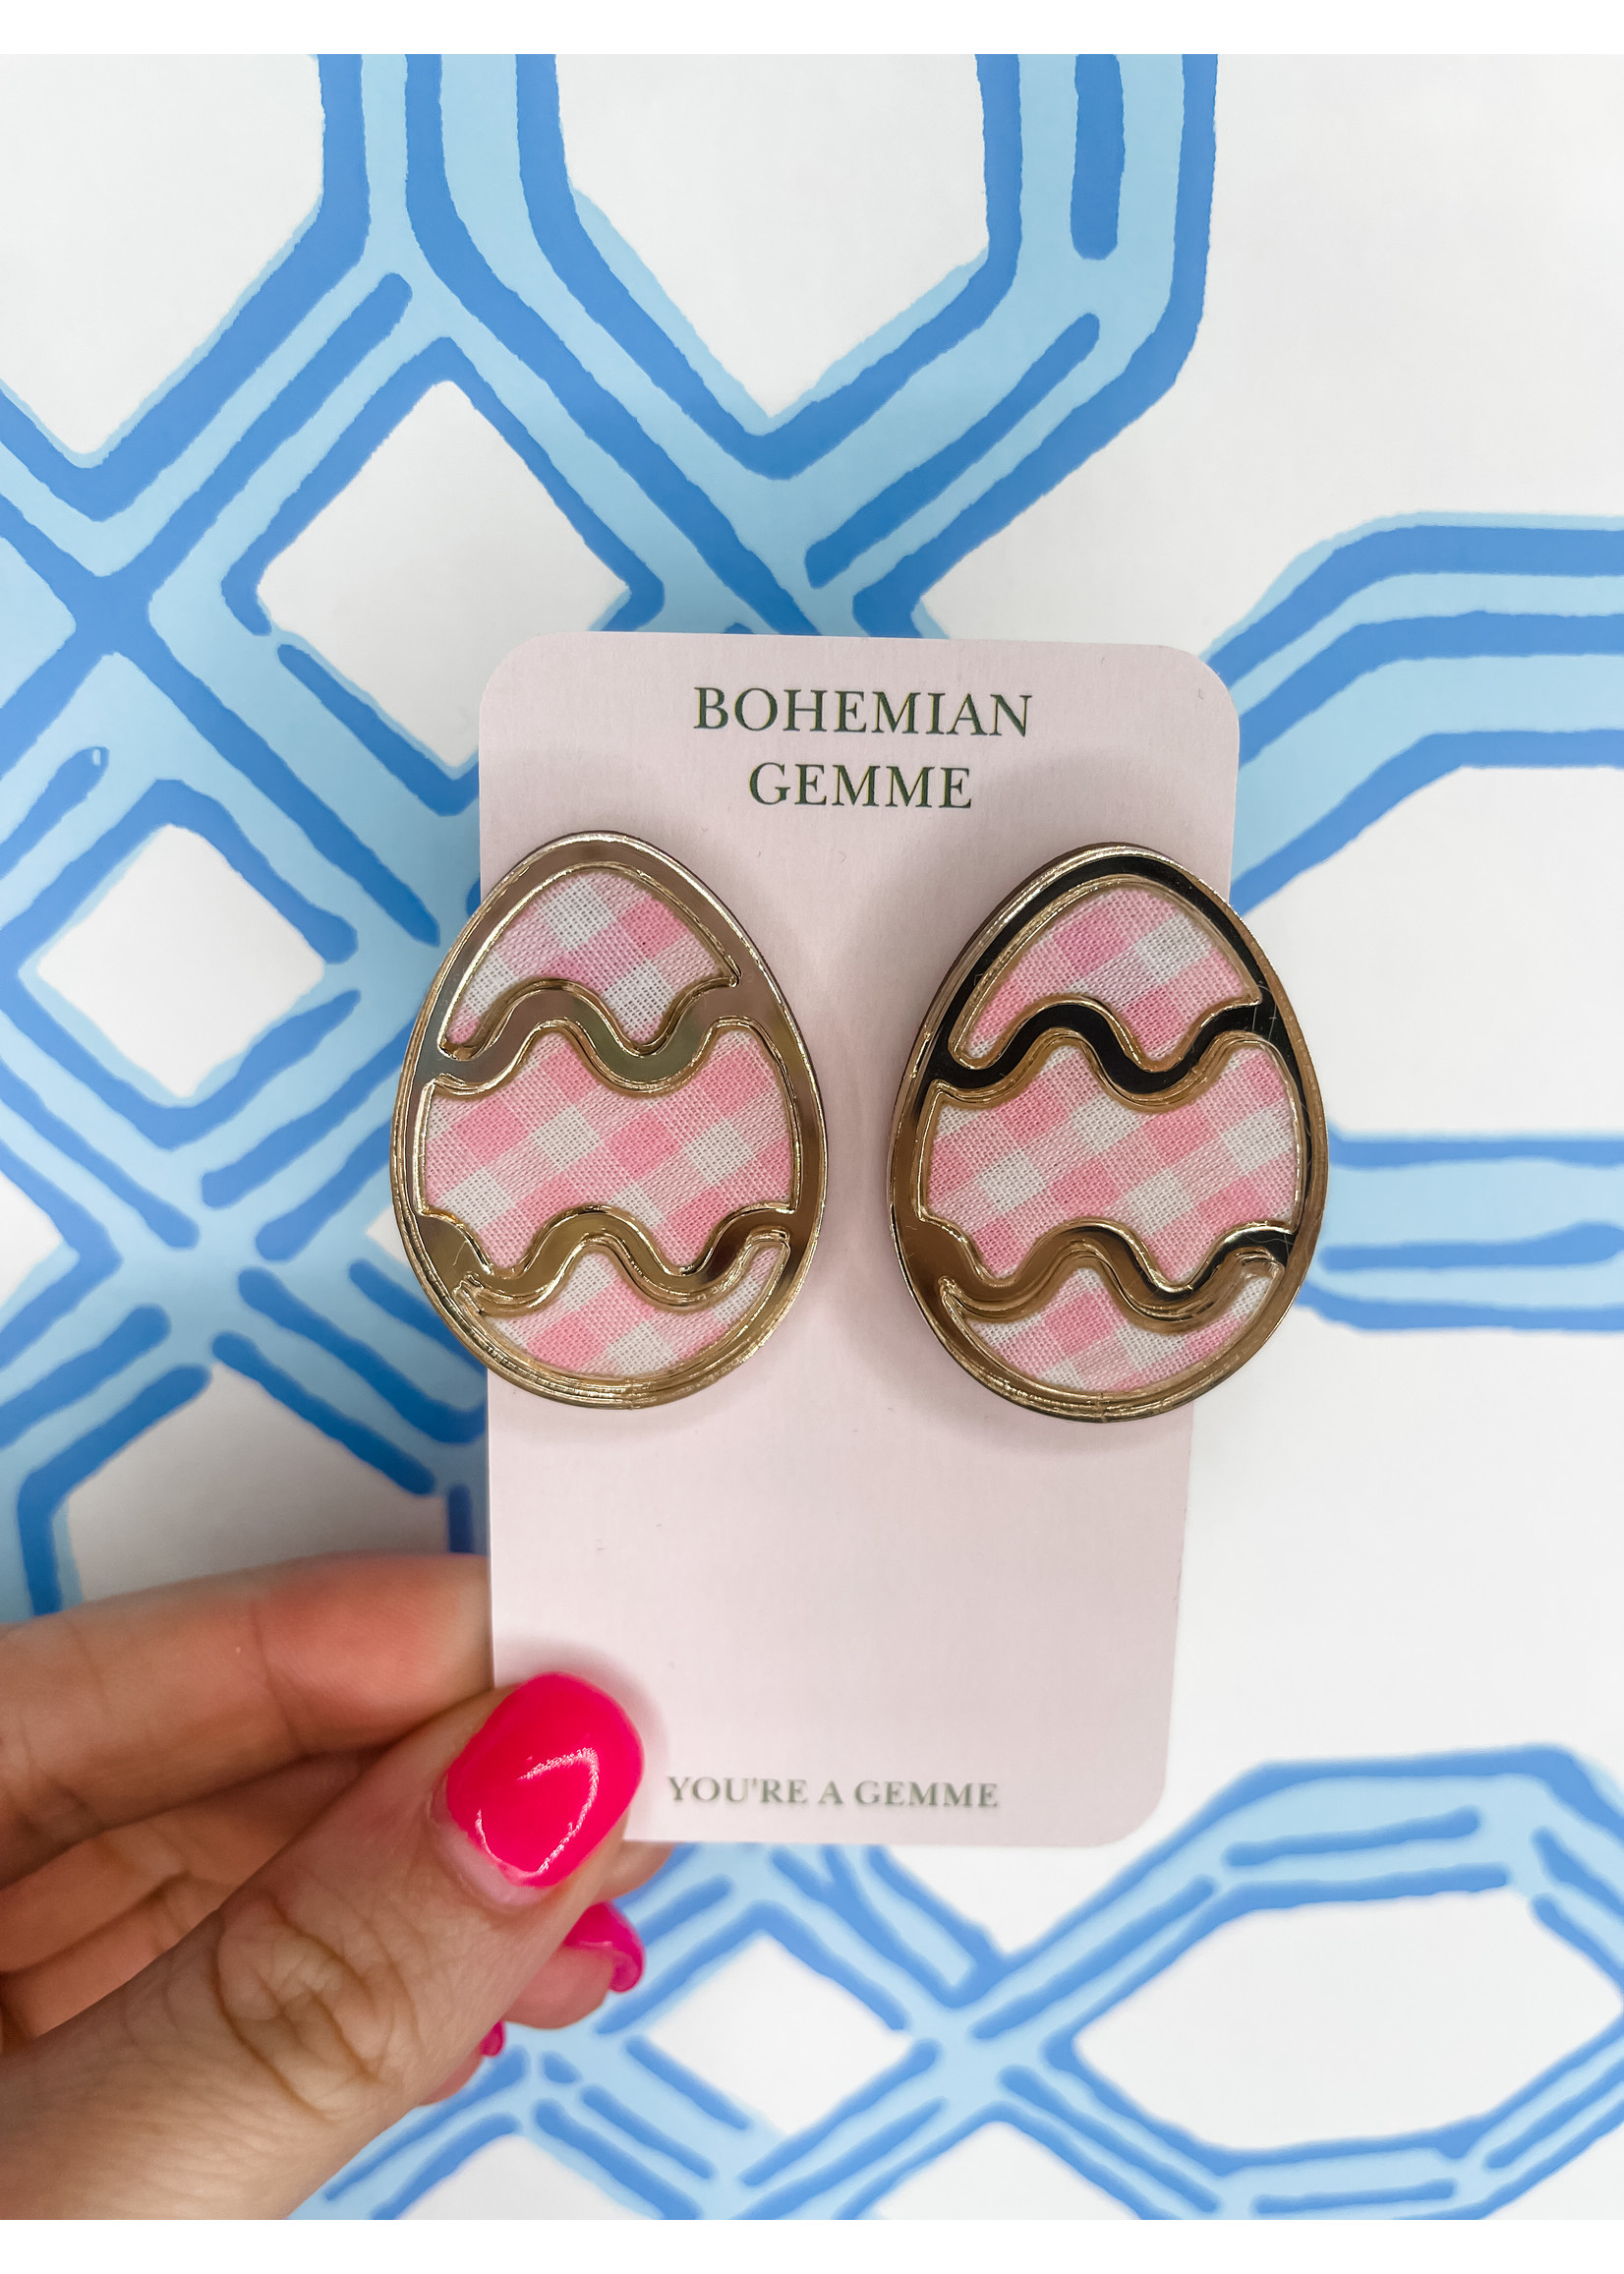 Bohemian Gemme Anastasia Pink Gingham Easter Eggs